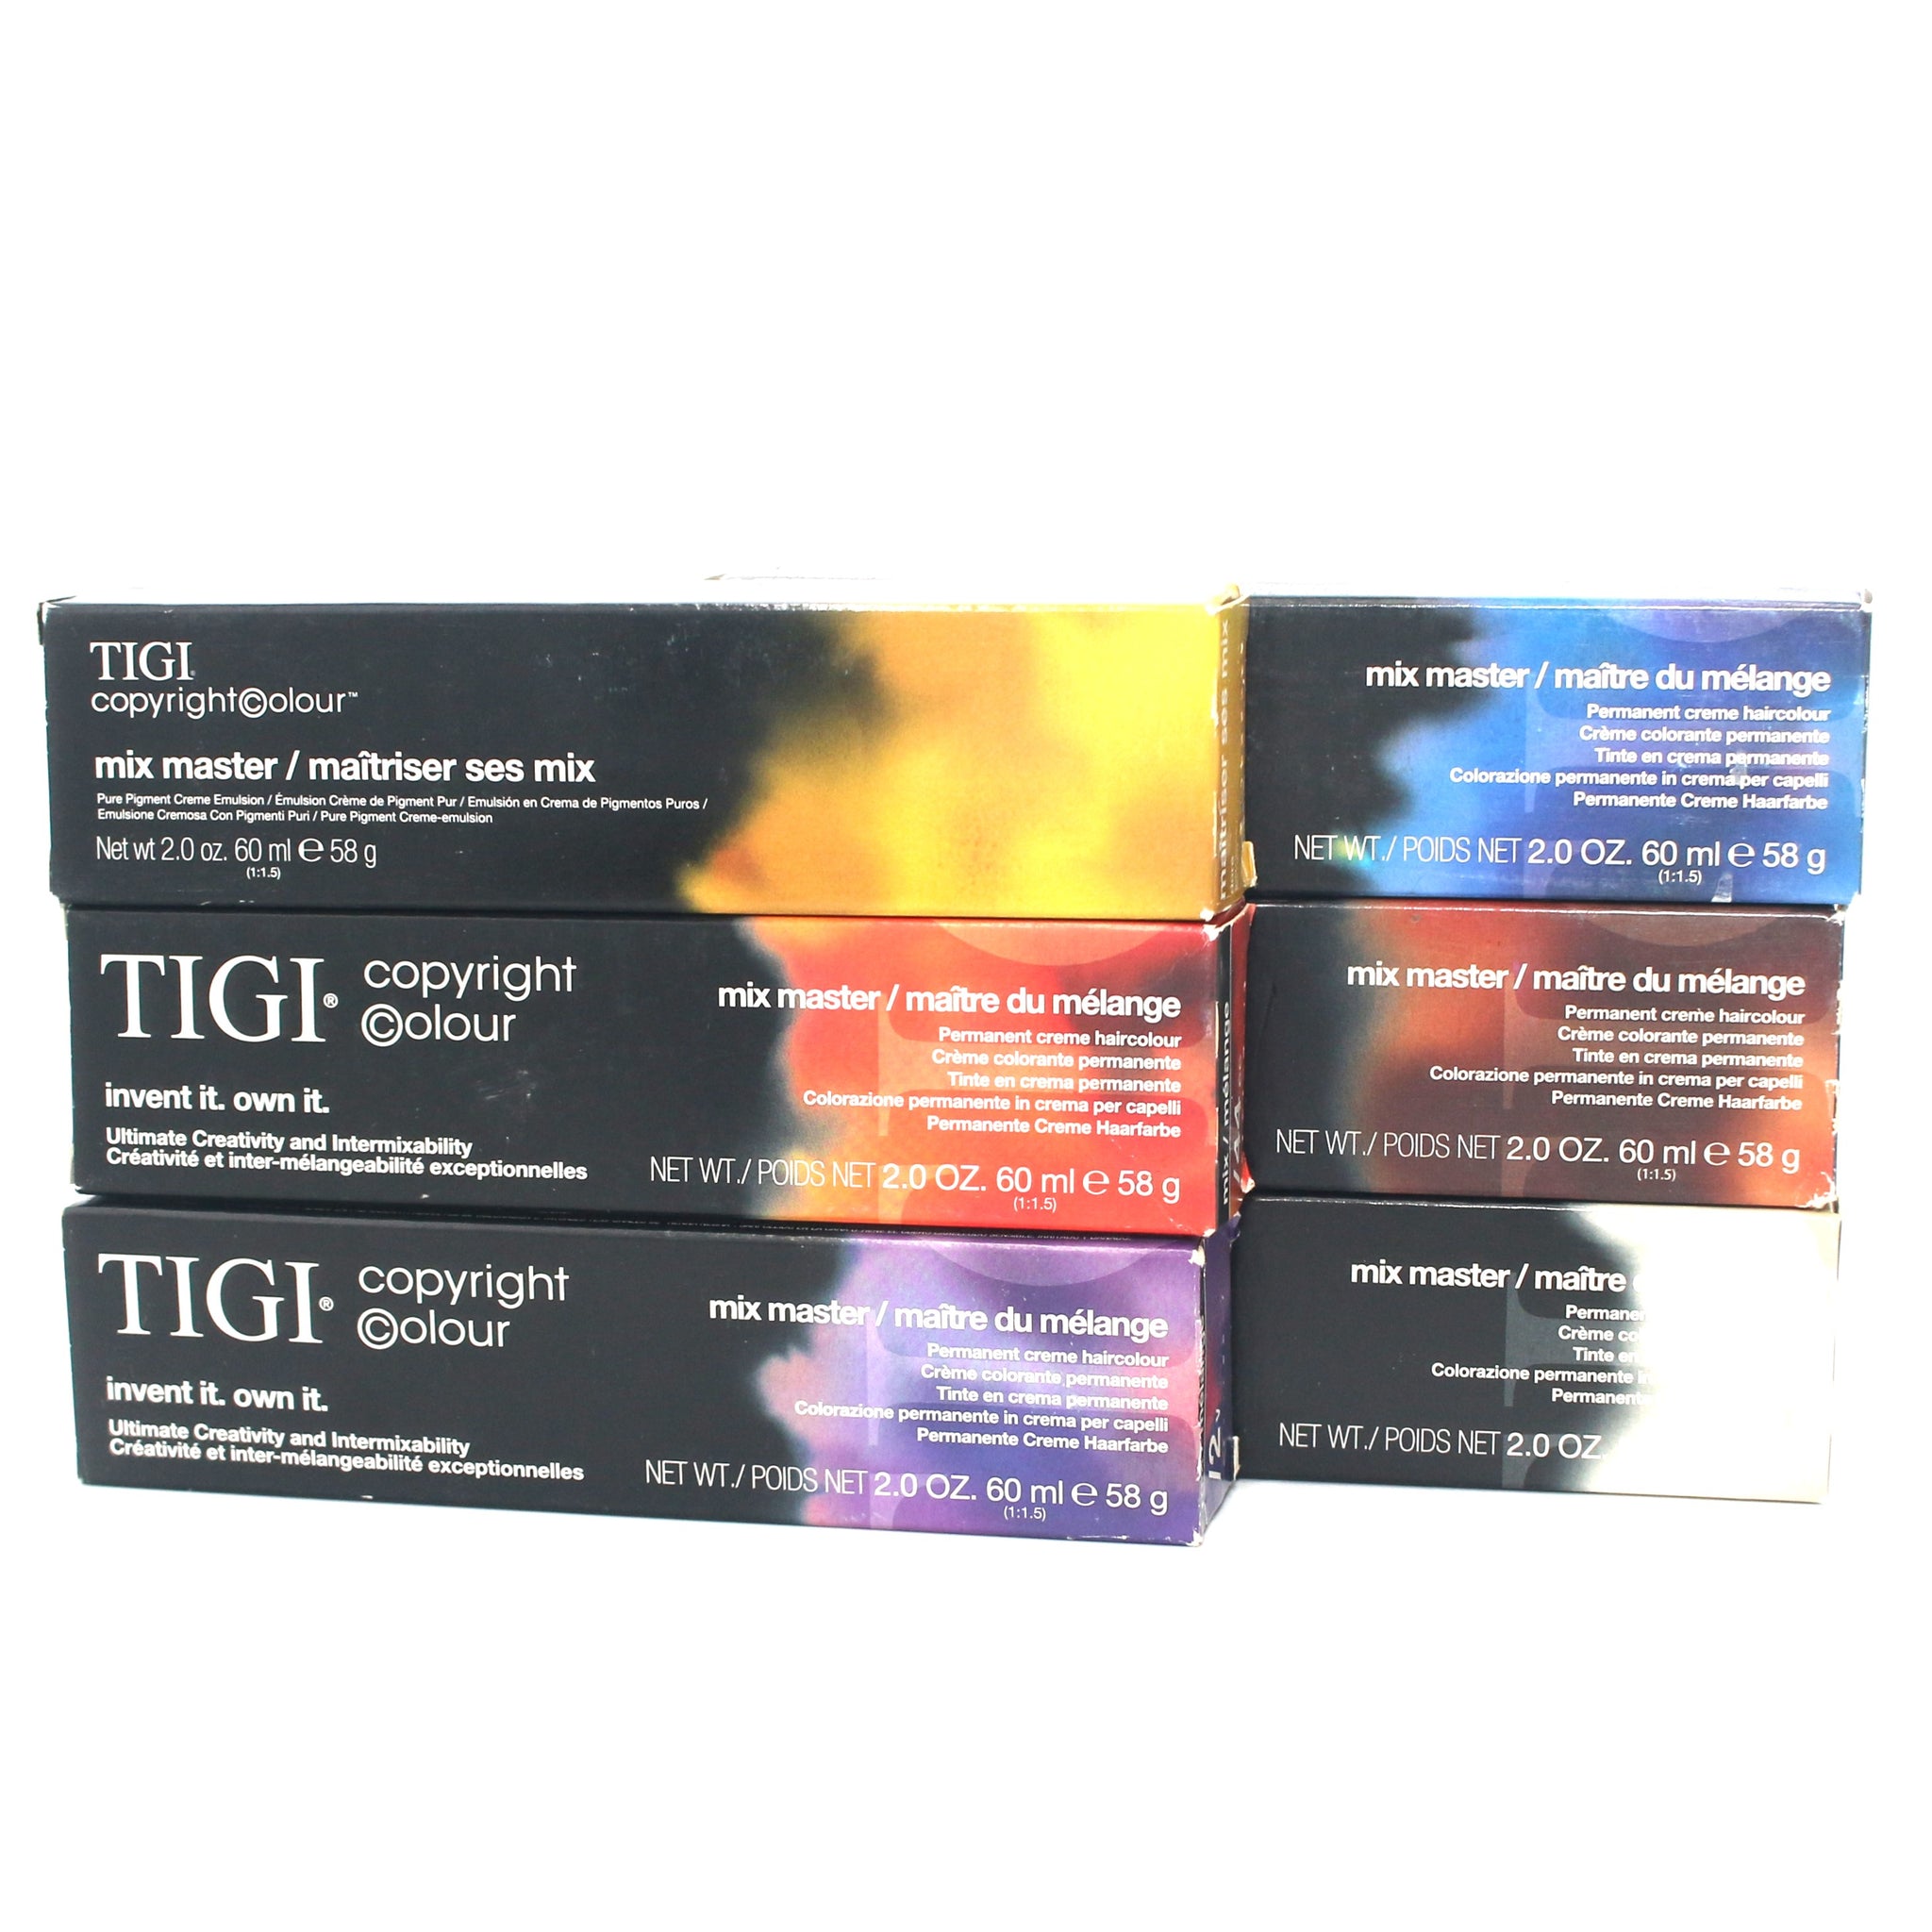 Tigi Copyright Colour Mix Master Pure Pigment Creme Emulsion 2 oz